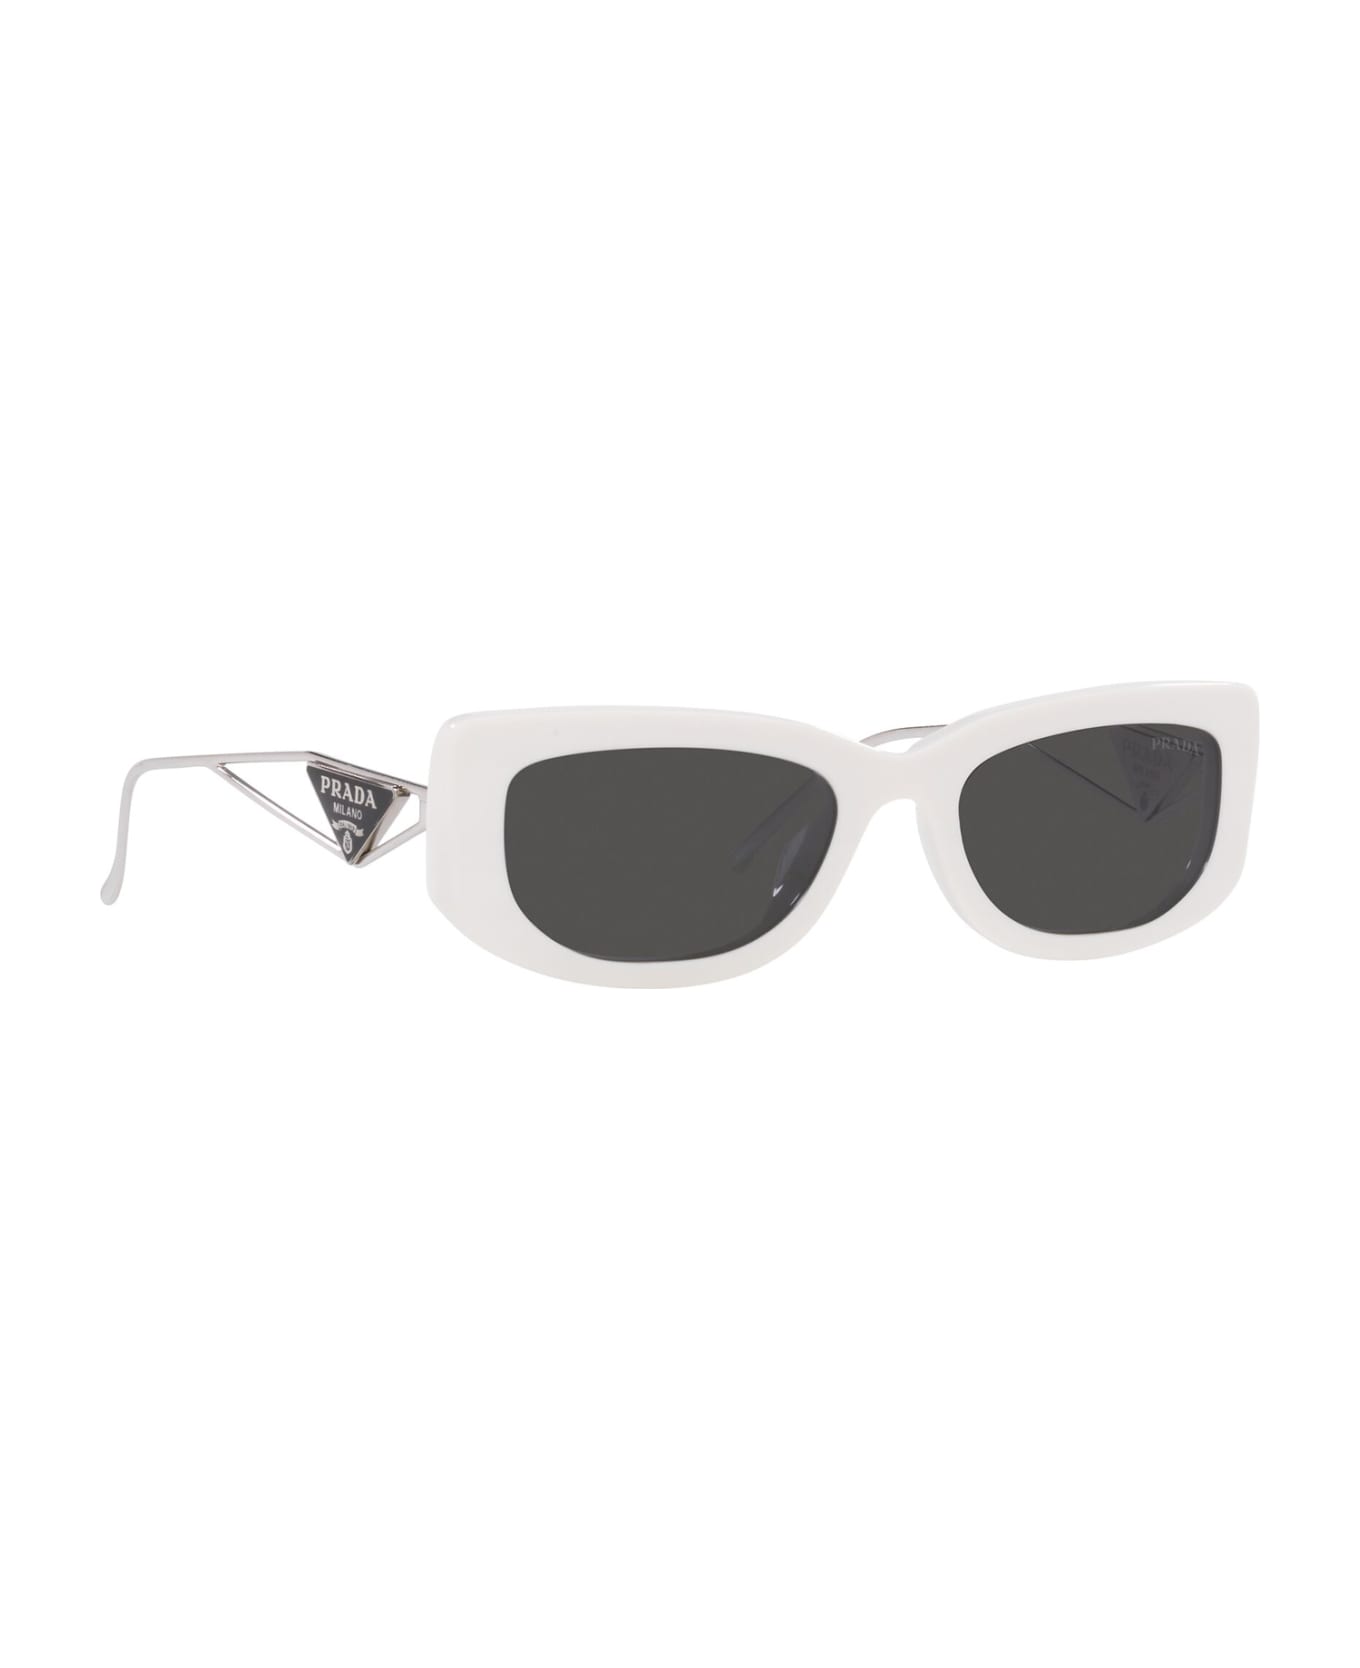 Prada Eyewear Pr 14ys Talc Sunglasses - Talc